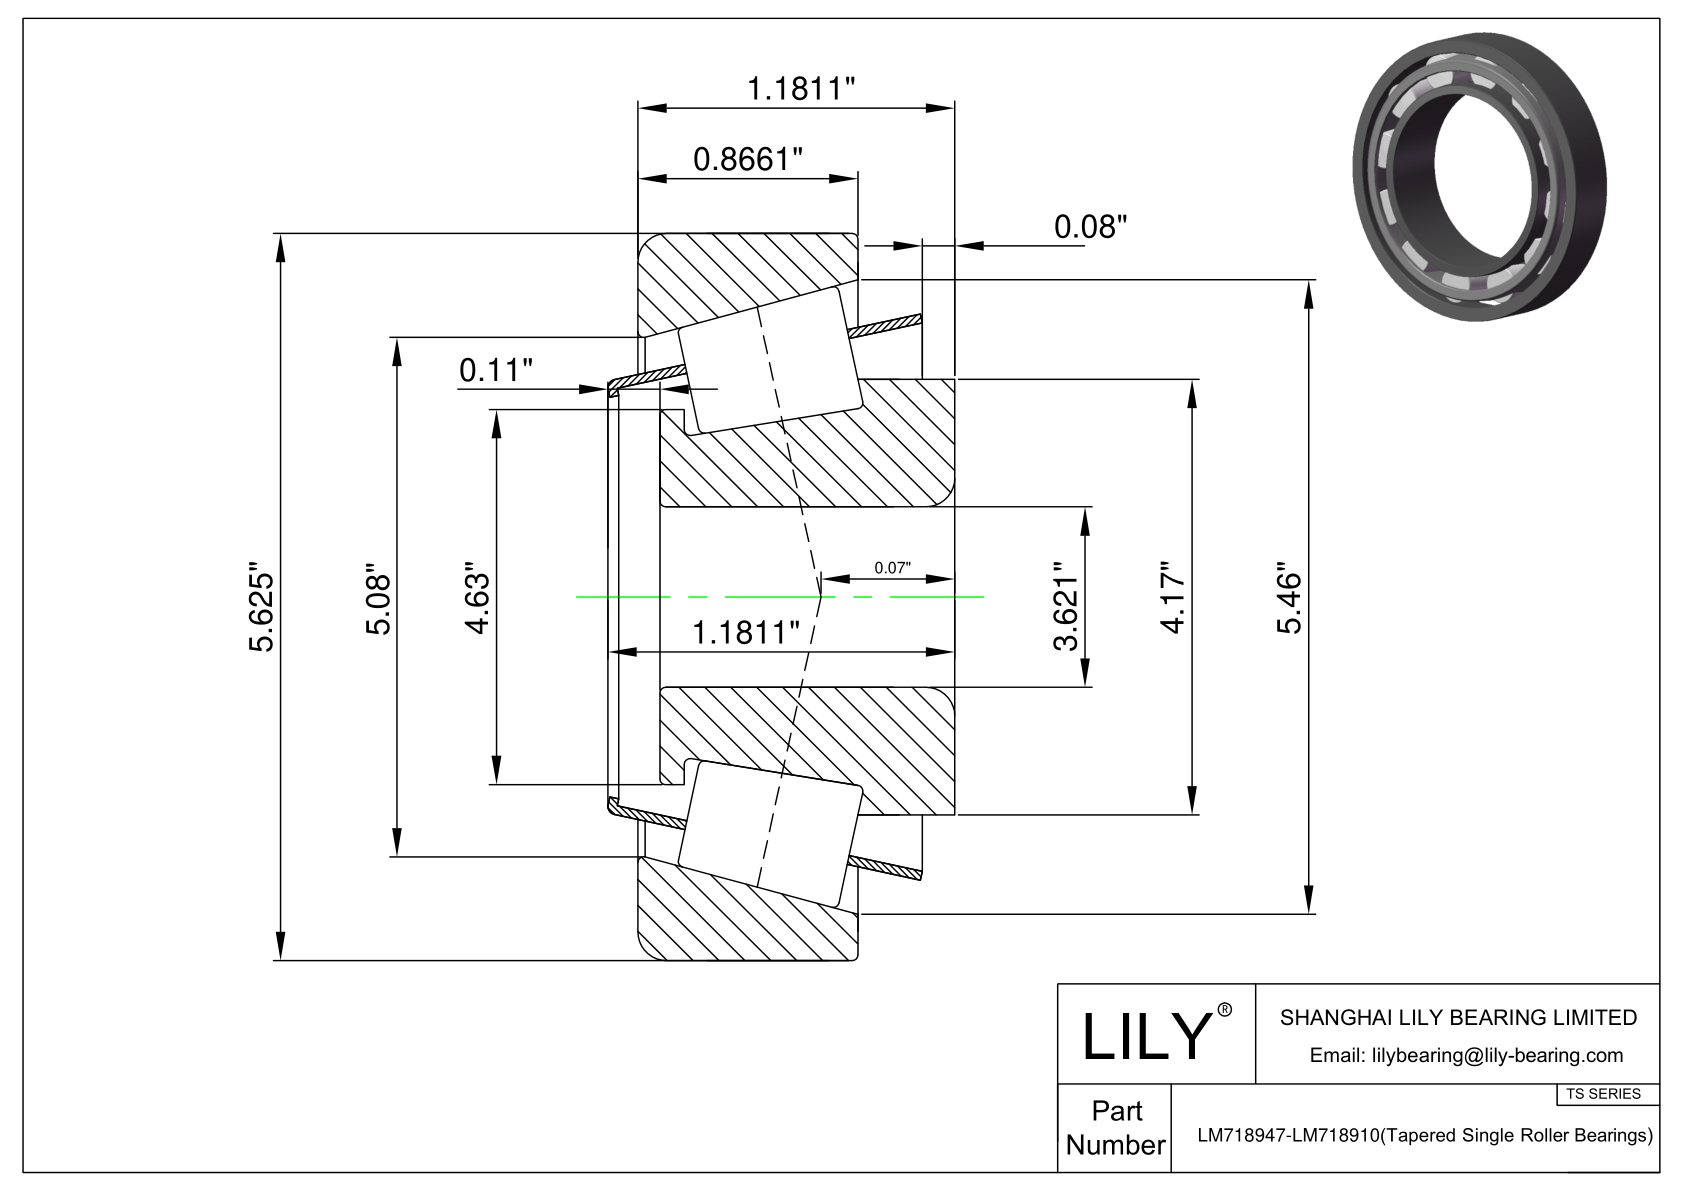 LM718947-LM718910 TS系列(圆锥单滚子轴承)(英制) CAD图形